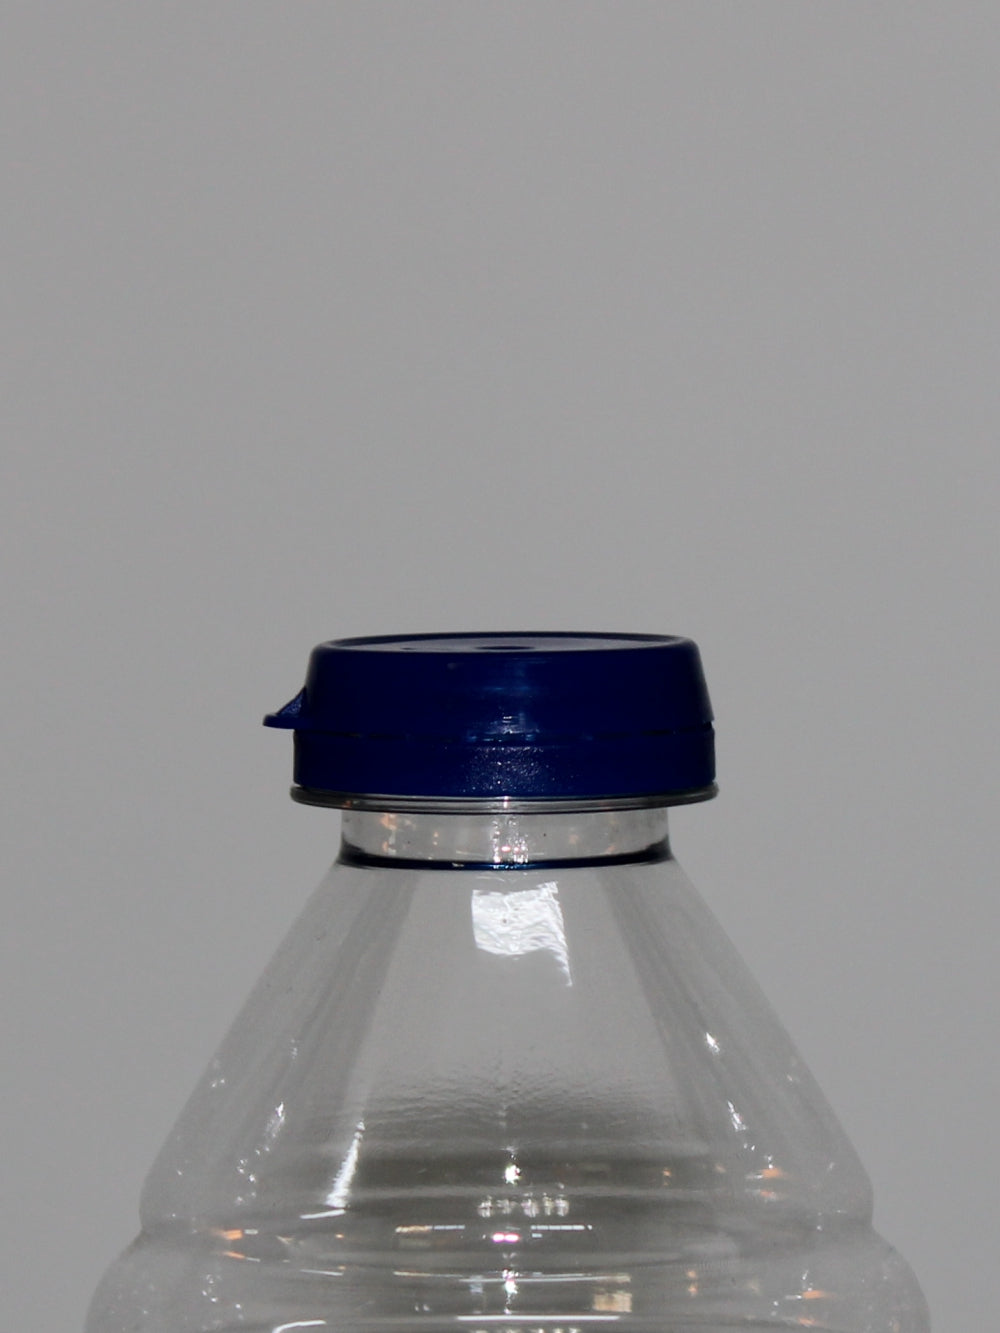 100ml Oil PET Bottle - (Box of 100 units)